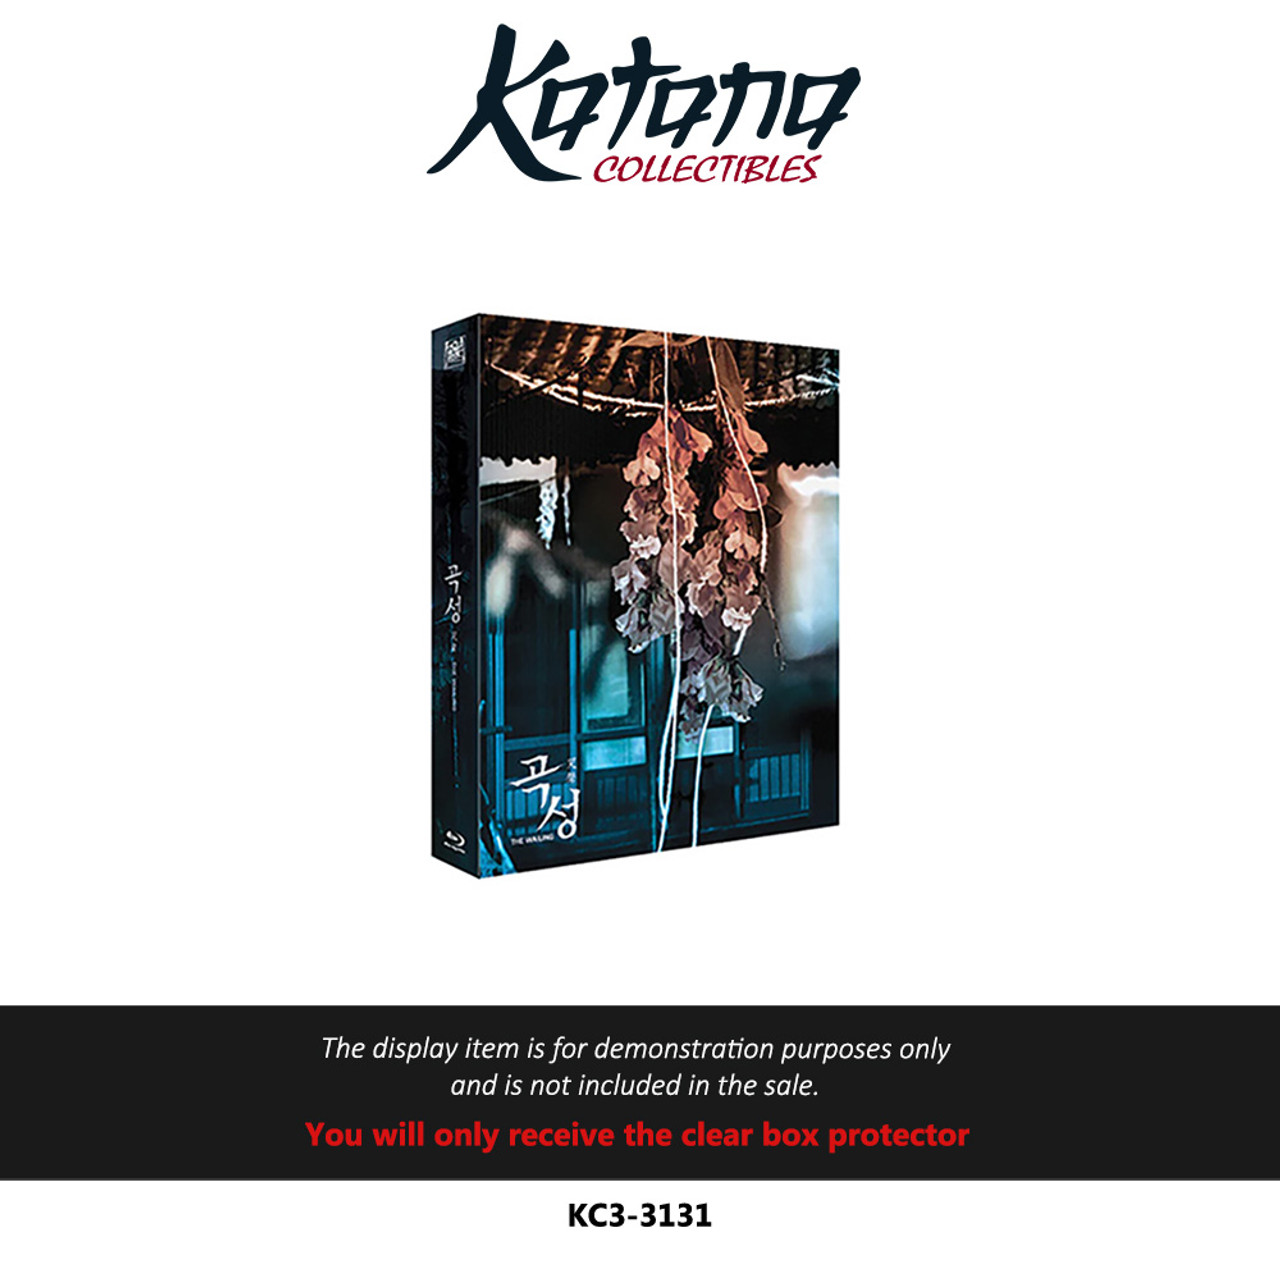 Katana Collectibles Protector For The Wailing Lenticular Boxset